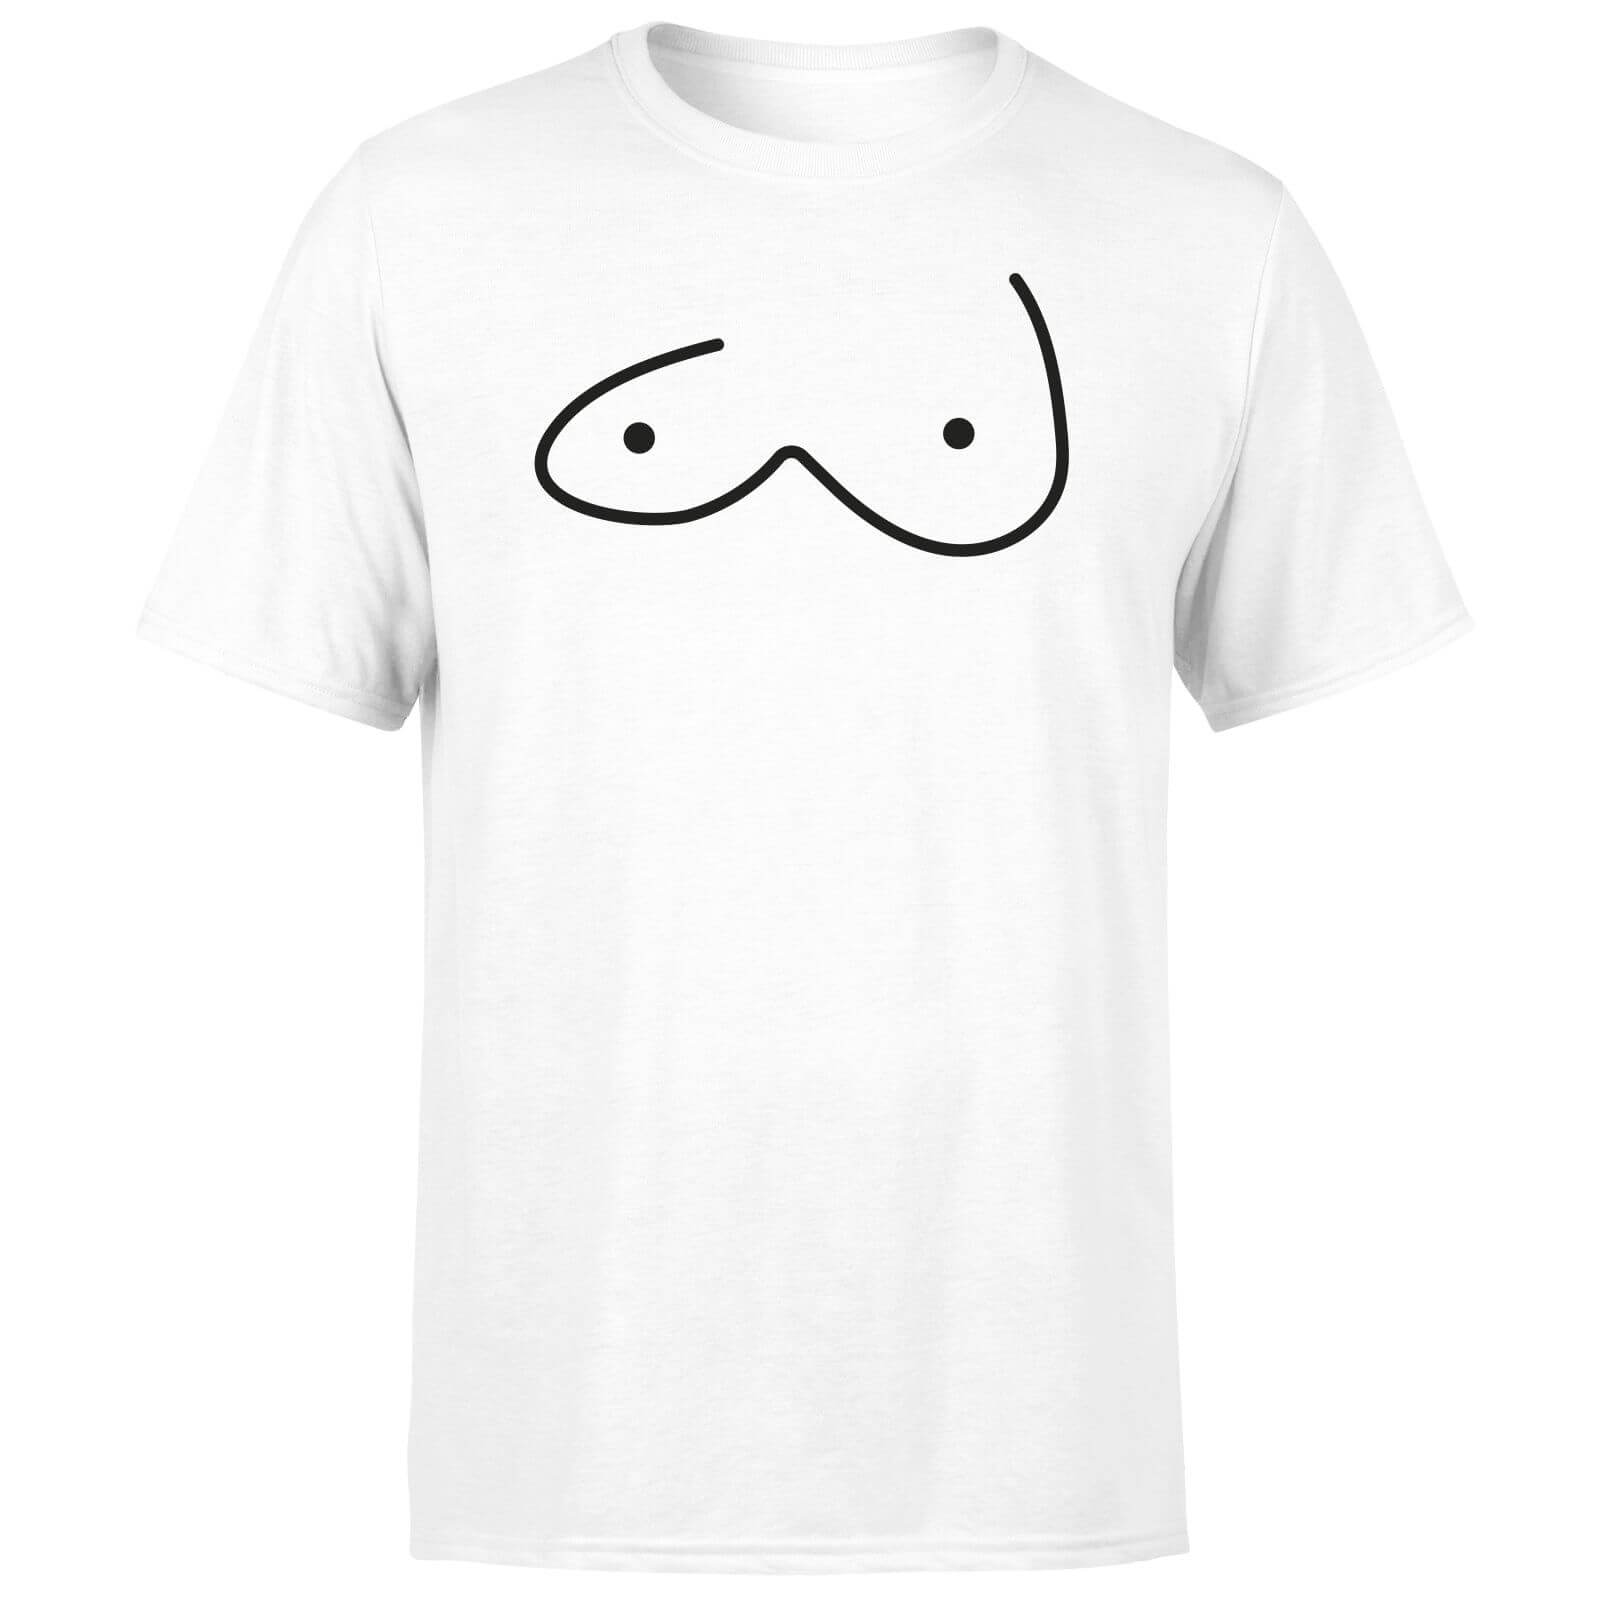 Wonky Bazookas Men's T-Shirt - White - XS - White